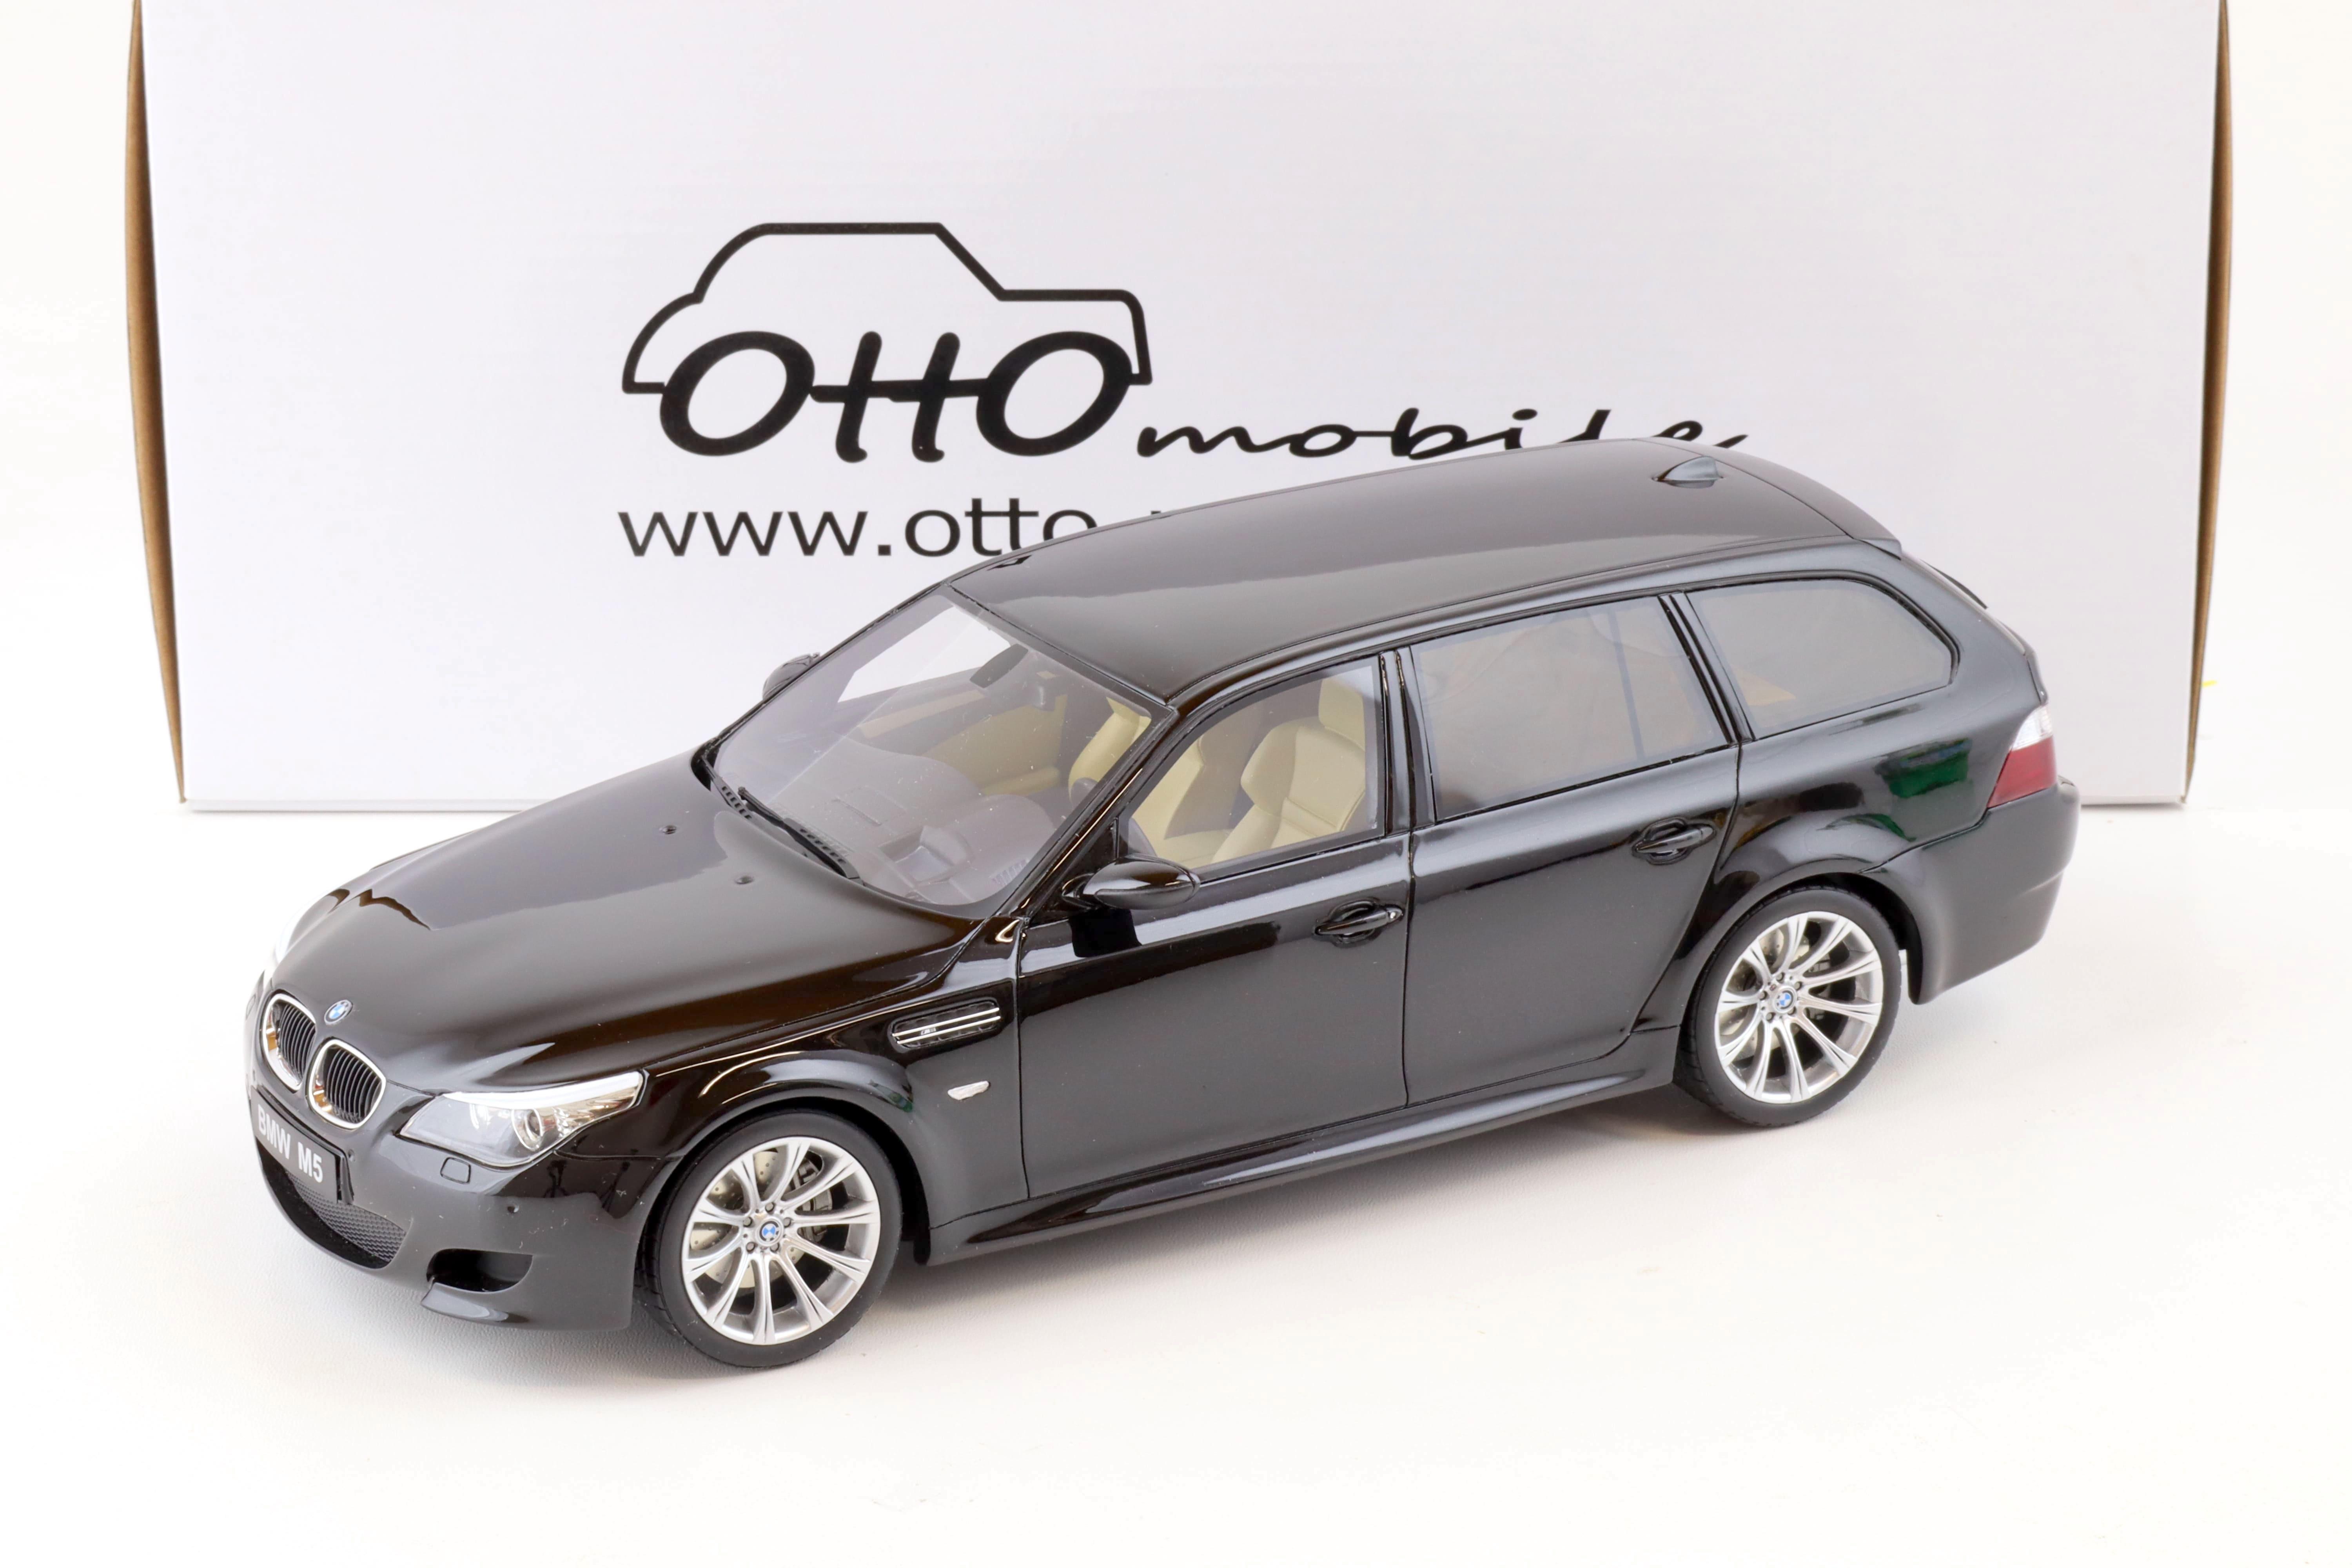 1:18 OTTO mobile OT1020 BMW M5 (E61) Touring black 2004